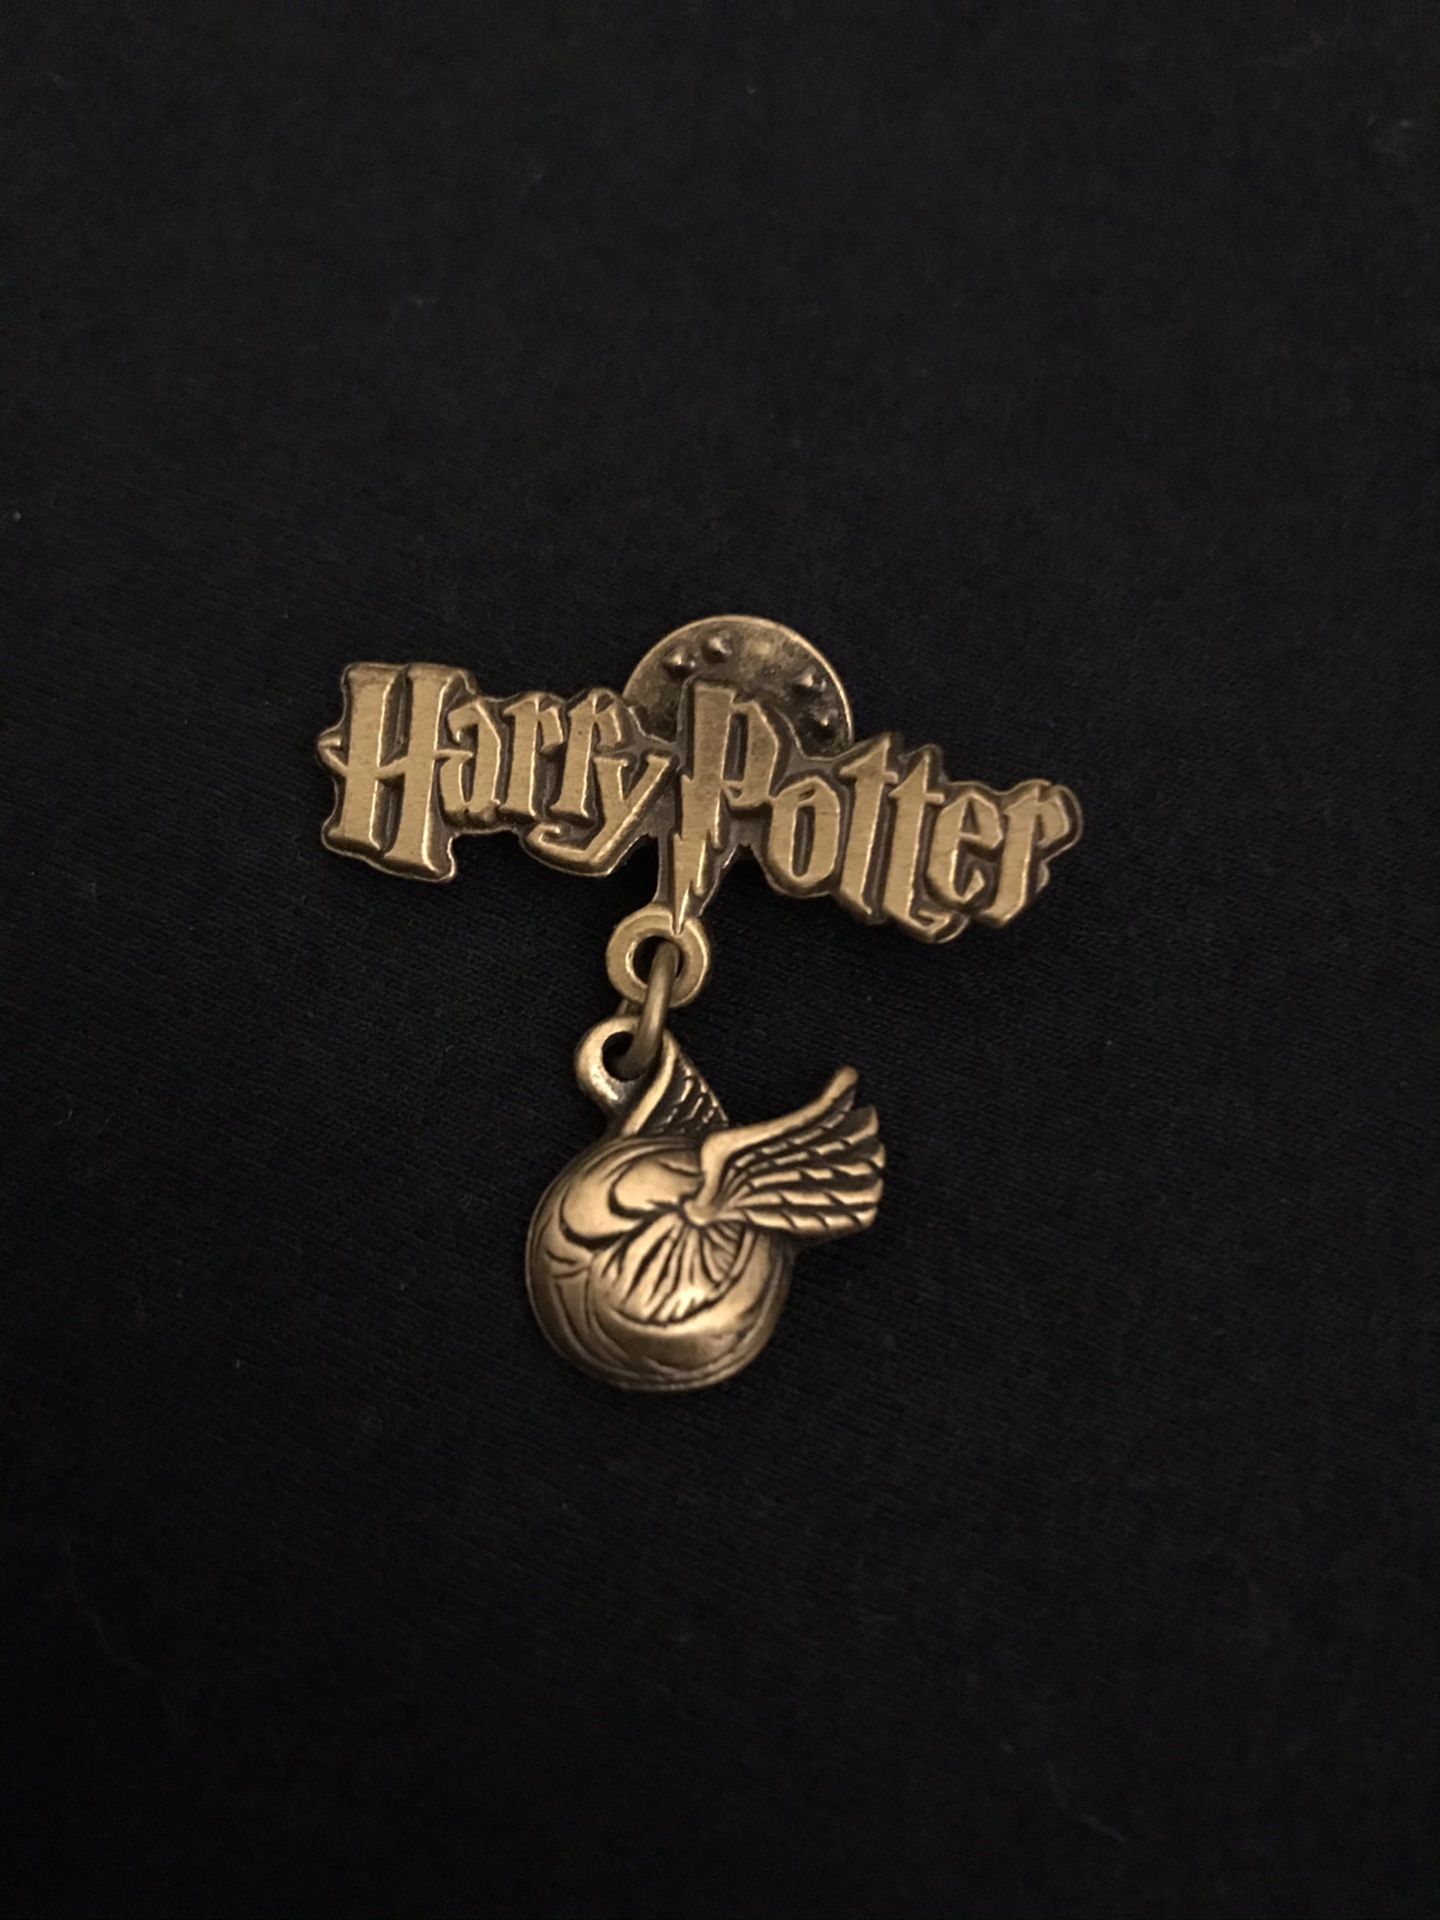 Harry Potter metal pin